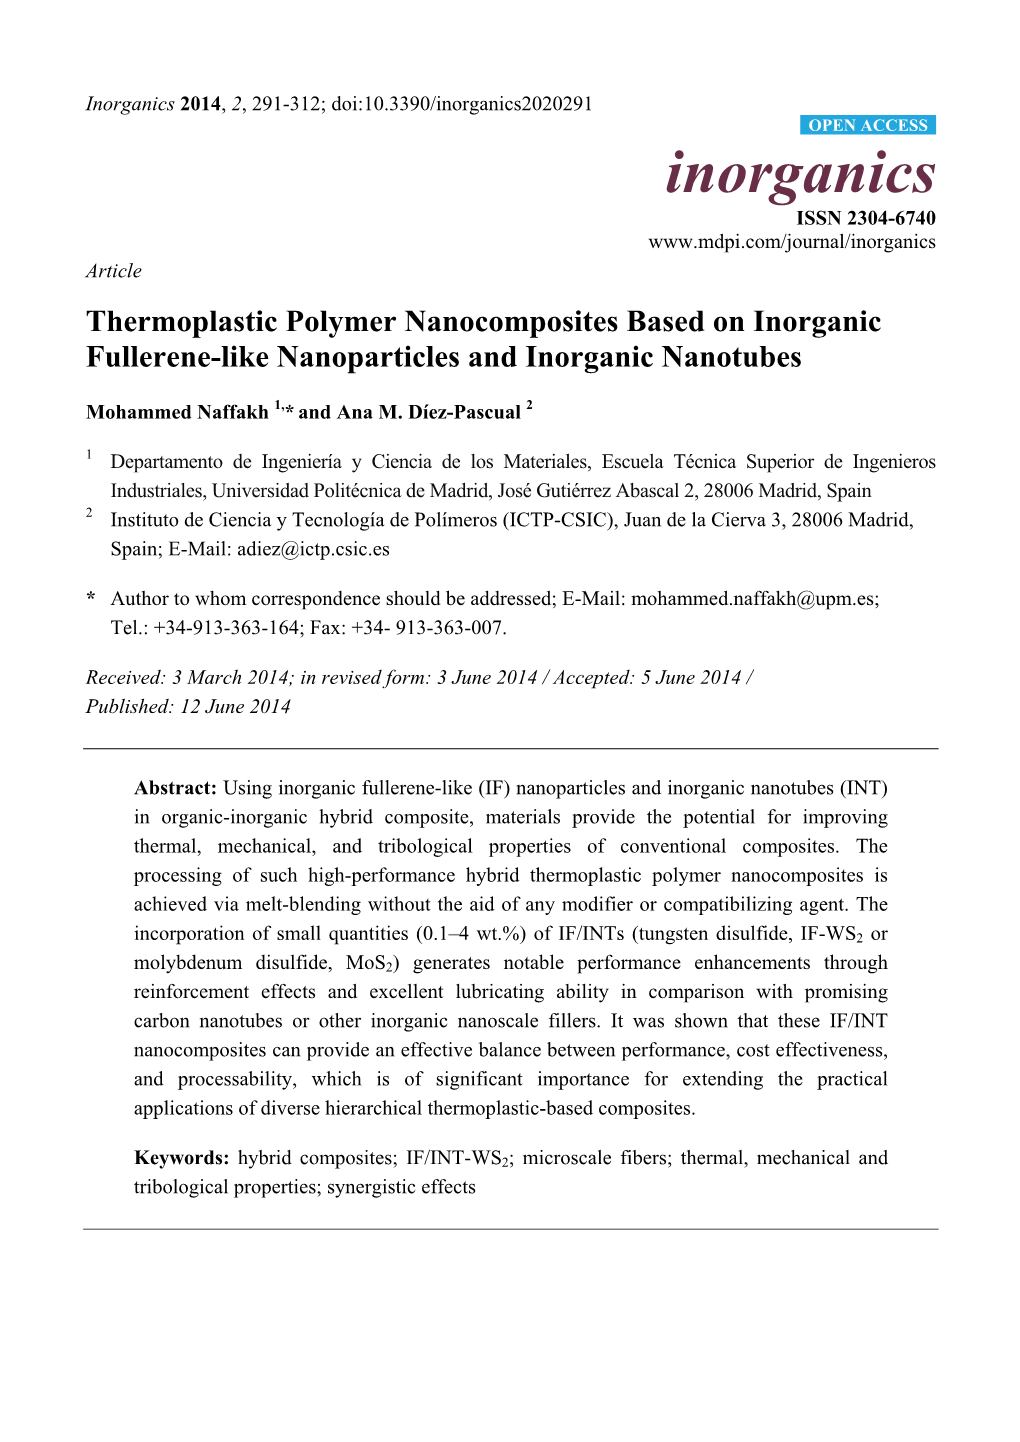 Thermoplastic Polymer Nanocomposites Based on Inorganic Fullerene-Like Nanoparticles and Inorganic Nanotubes